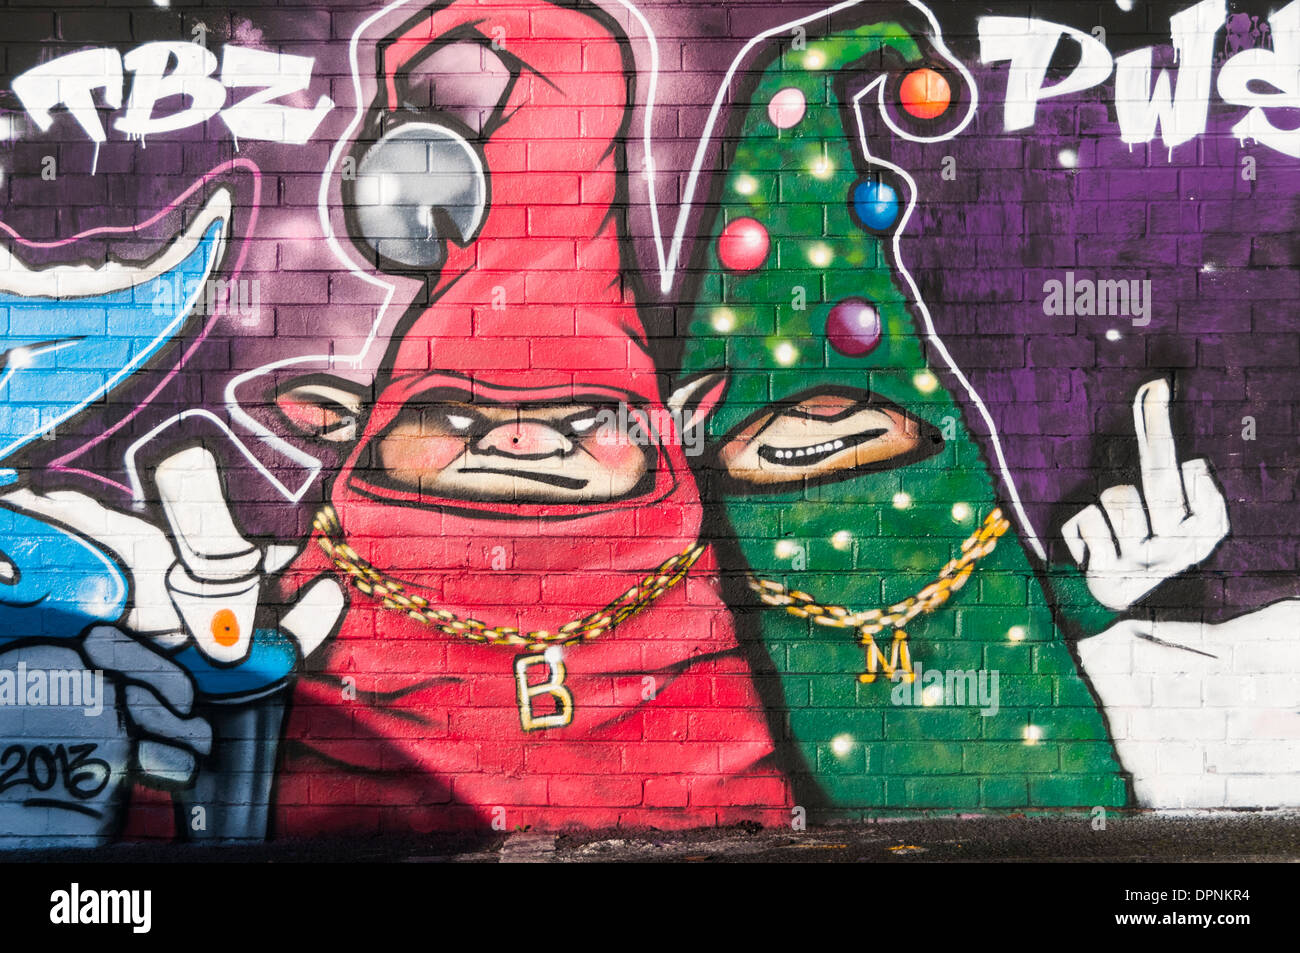 Compartir 47+ imagen graffitis de navidad